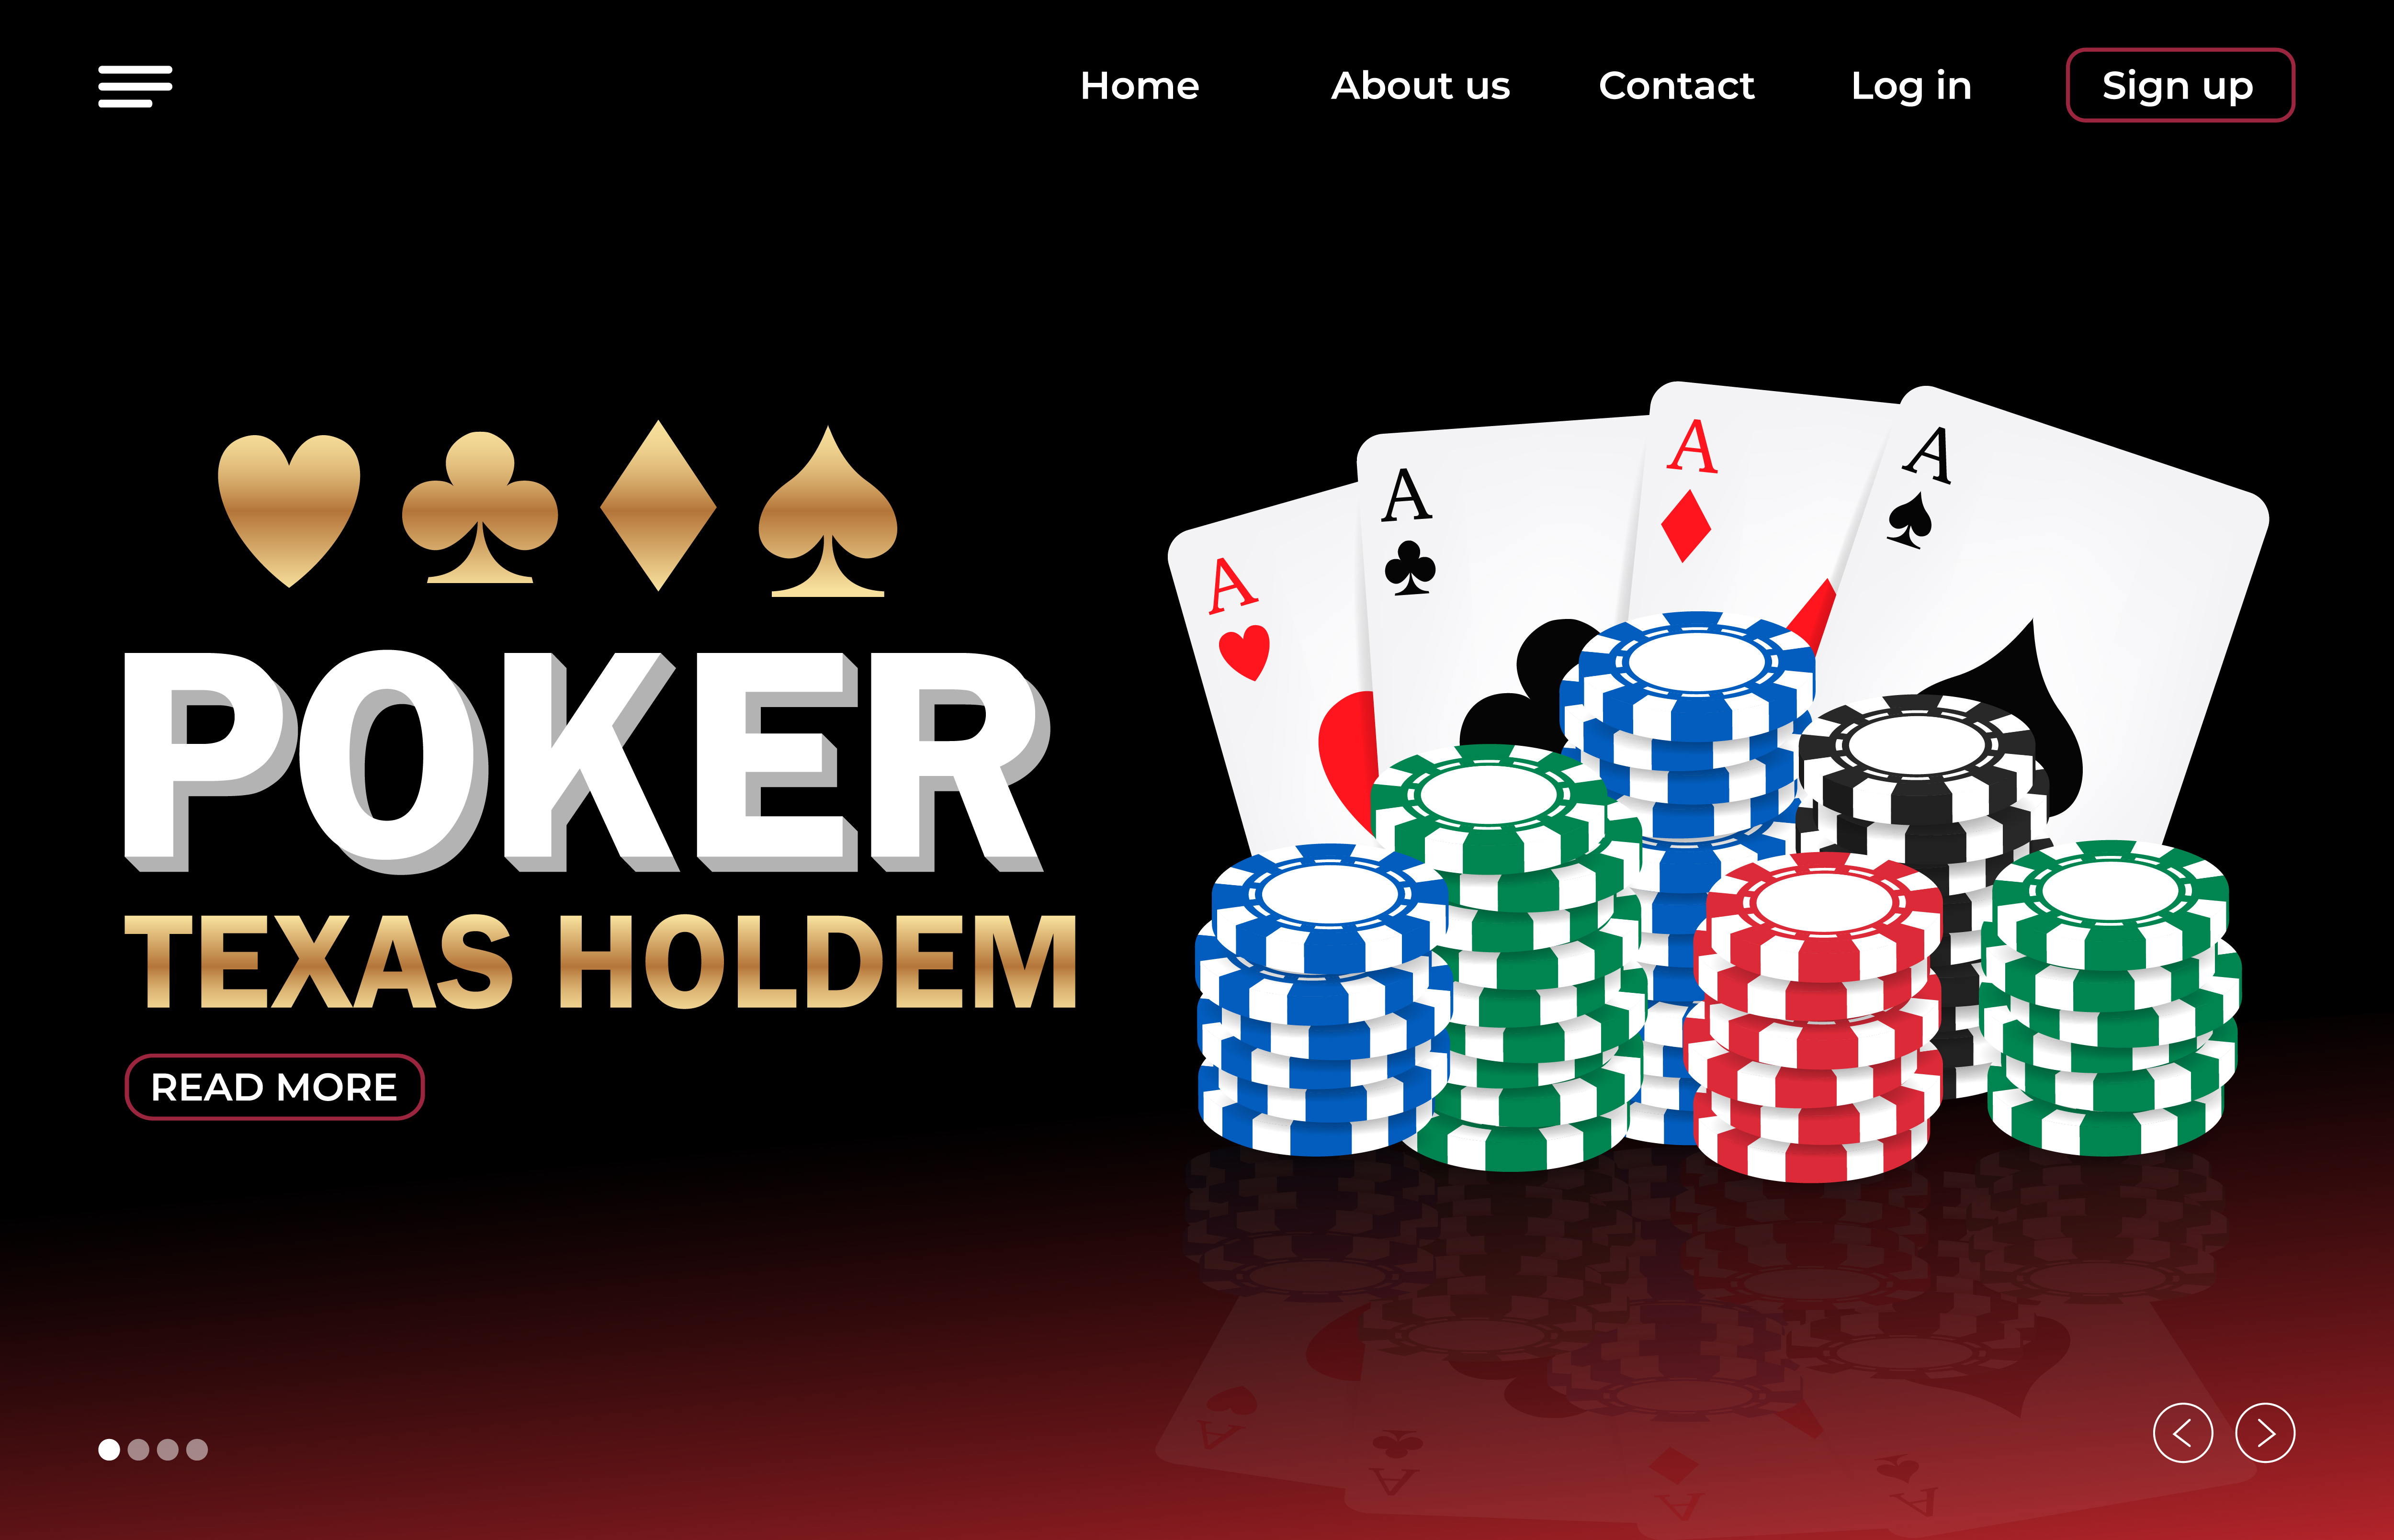 poker-online-landing-page-template-vector.jpg